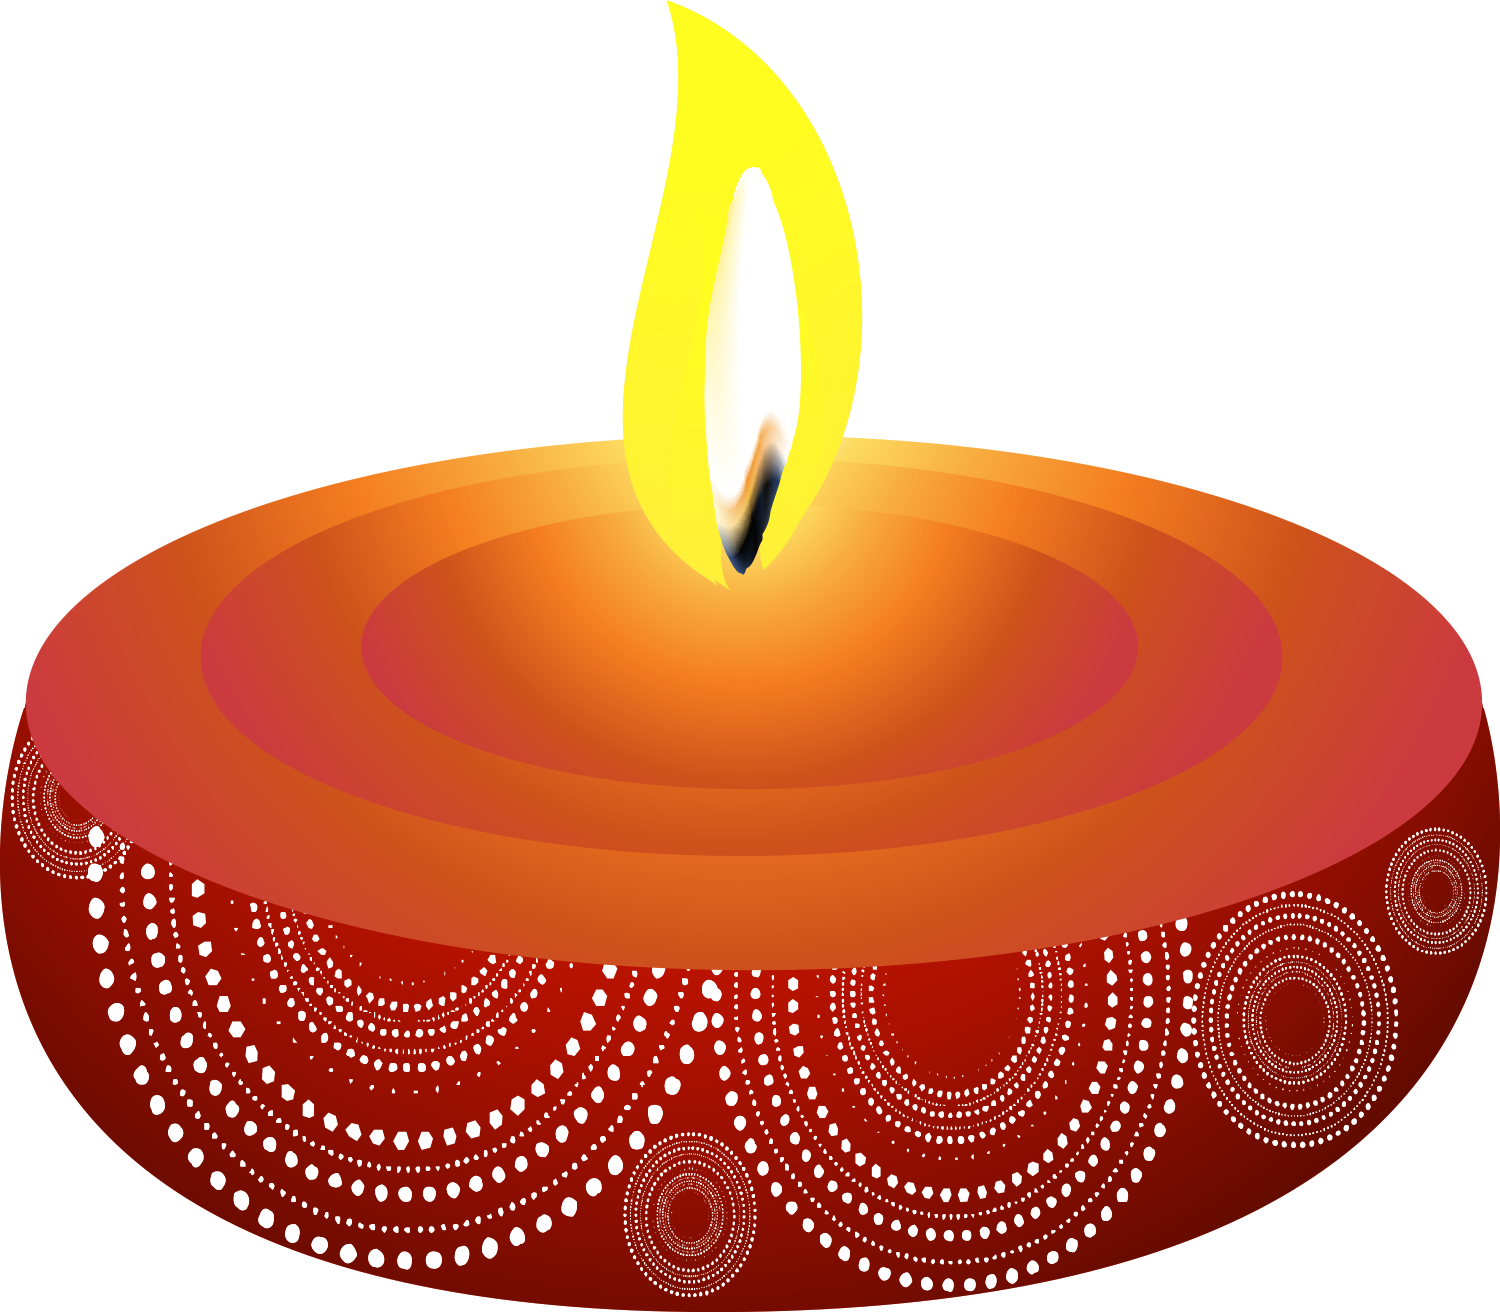 Diwali Festival Clay Lamp Illustration